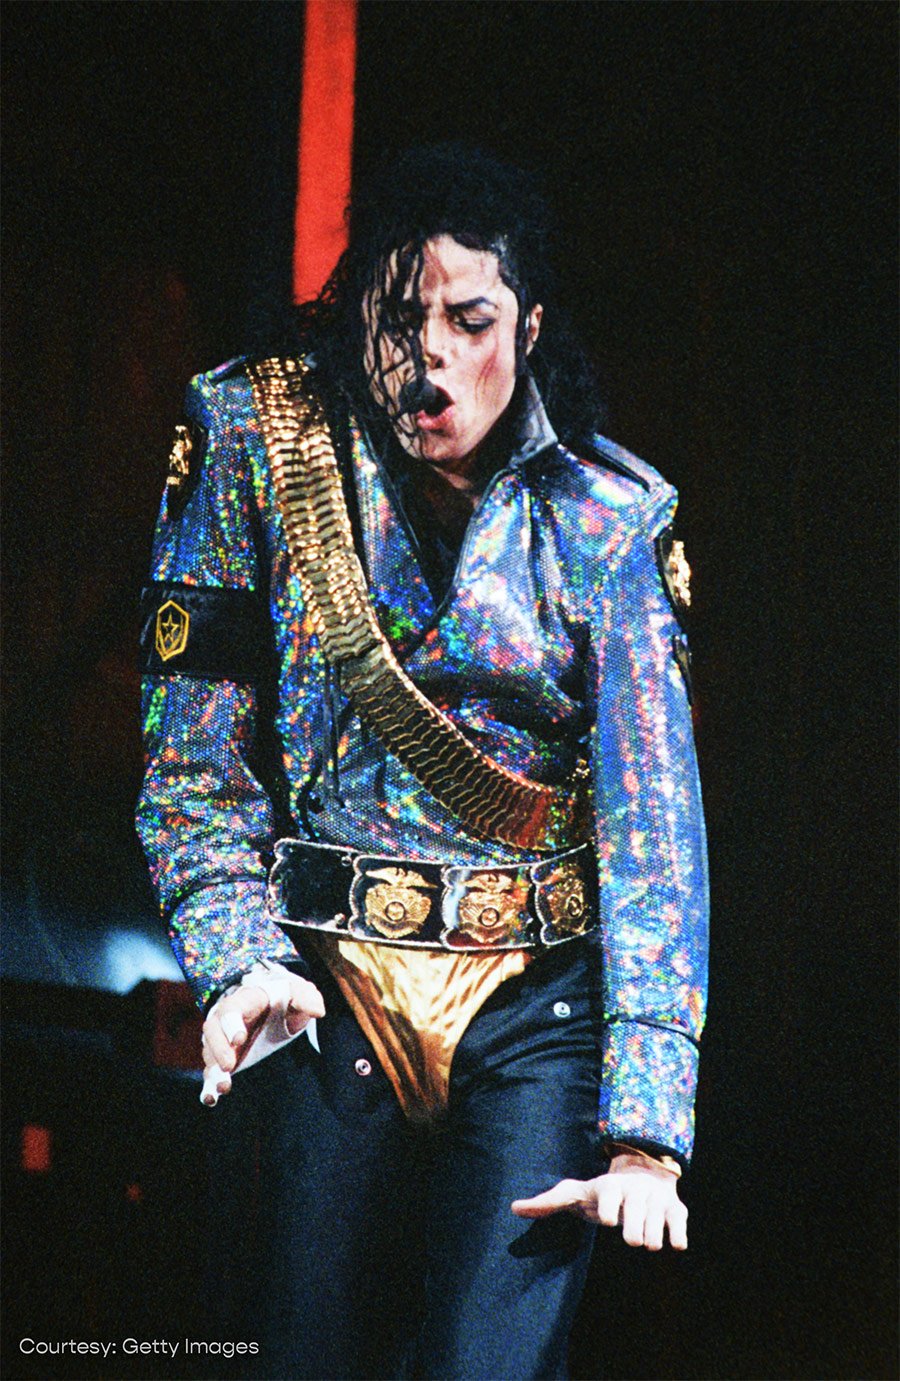 Michael Jackson performs during his Dangerous World Tour.